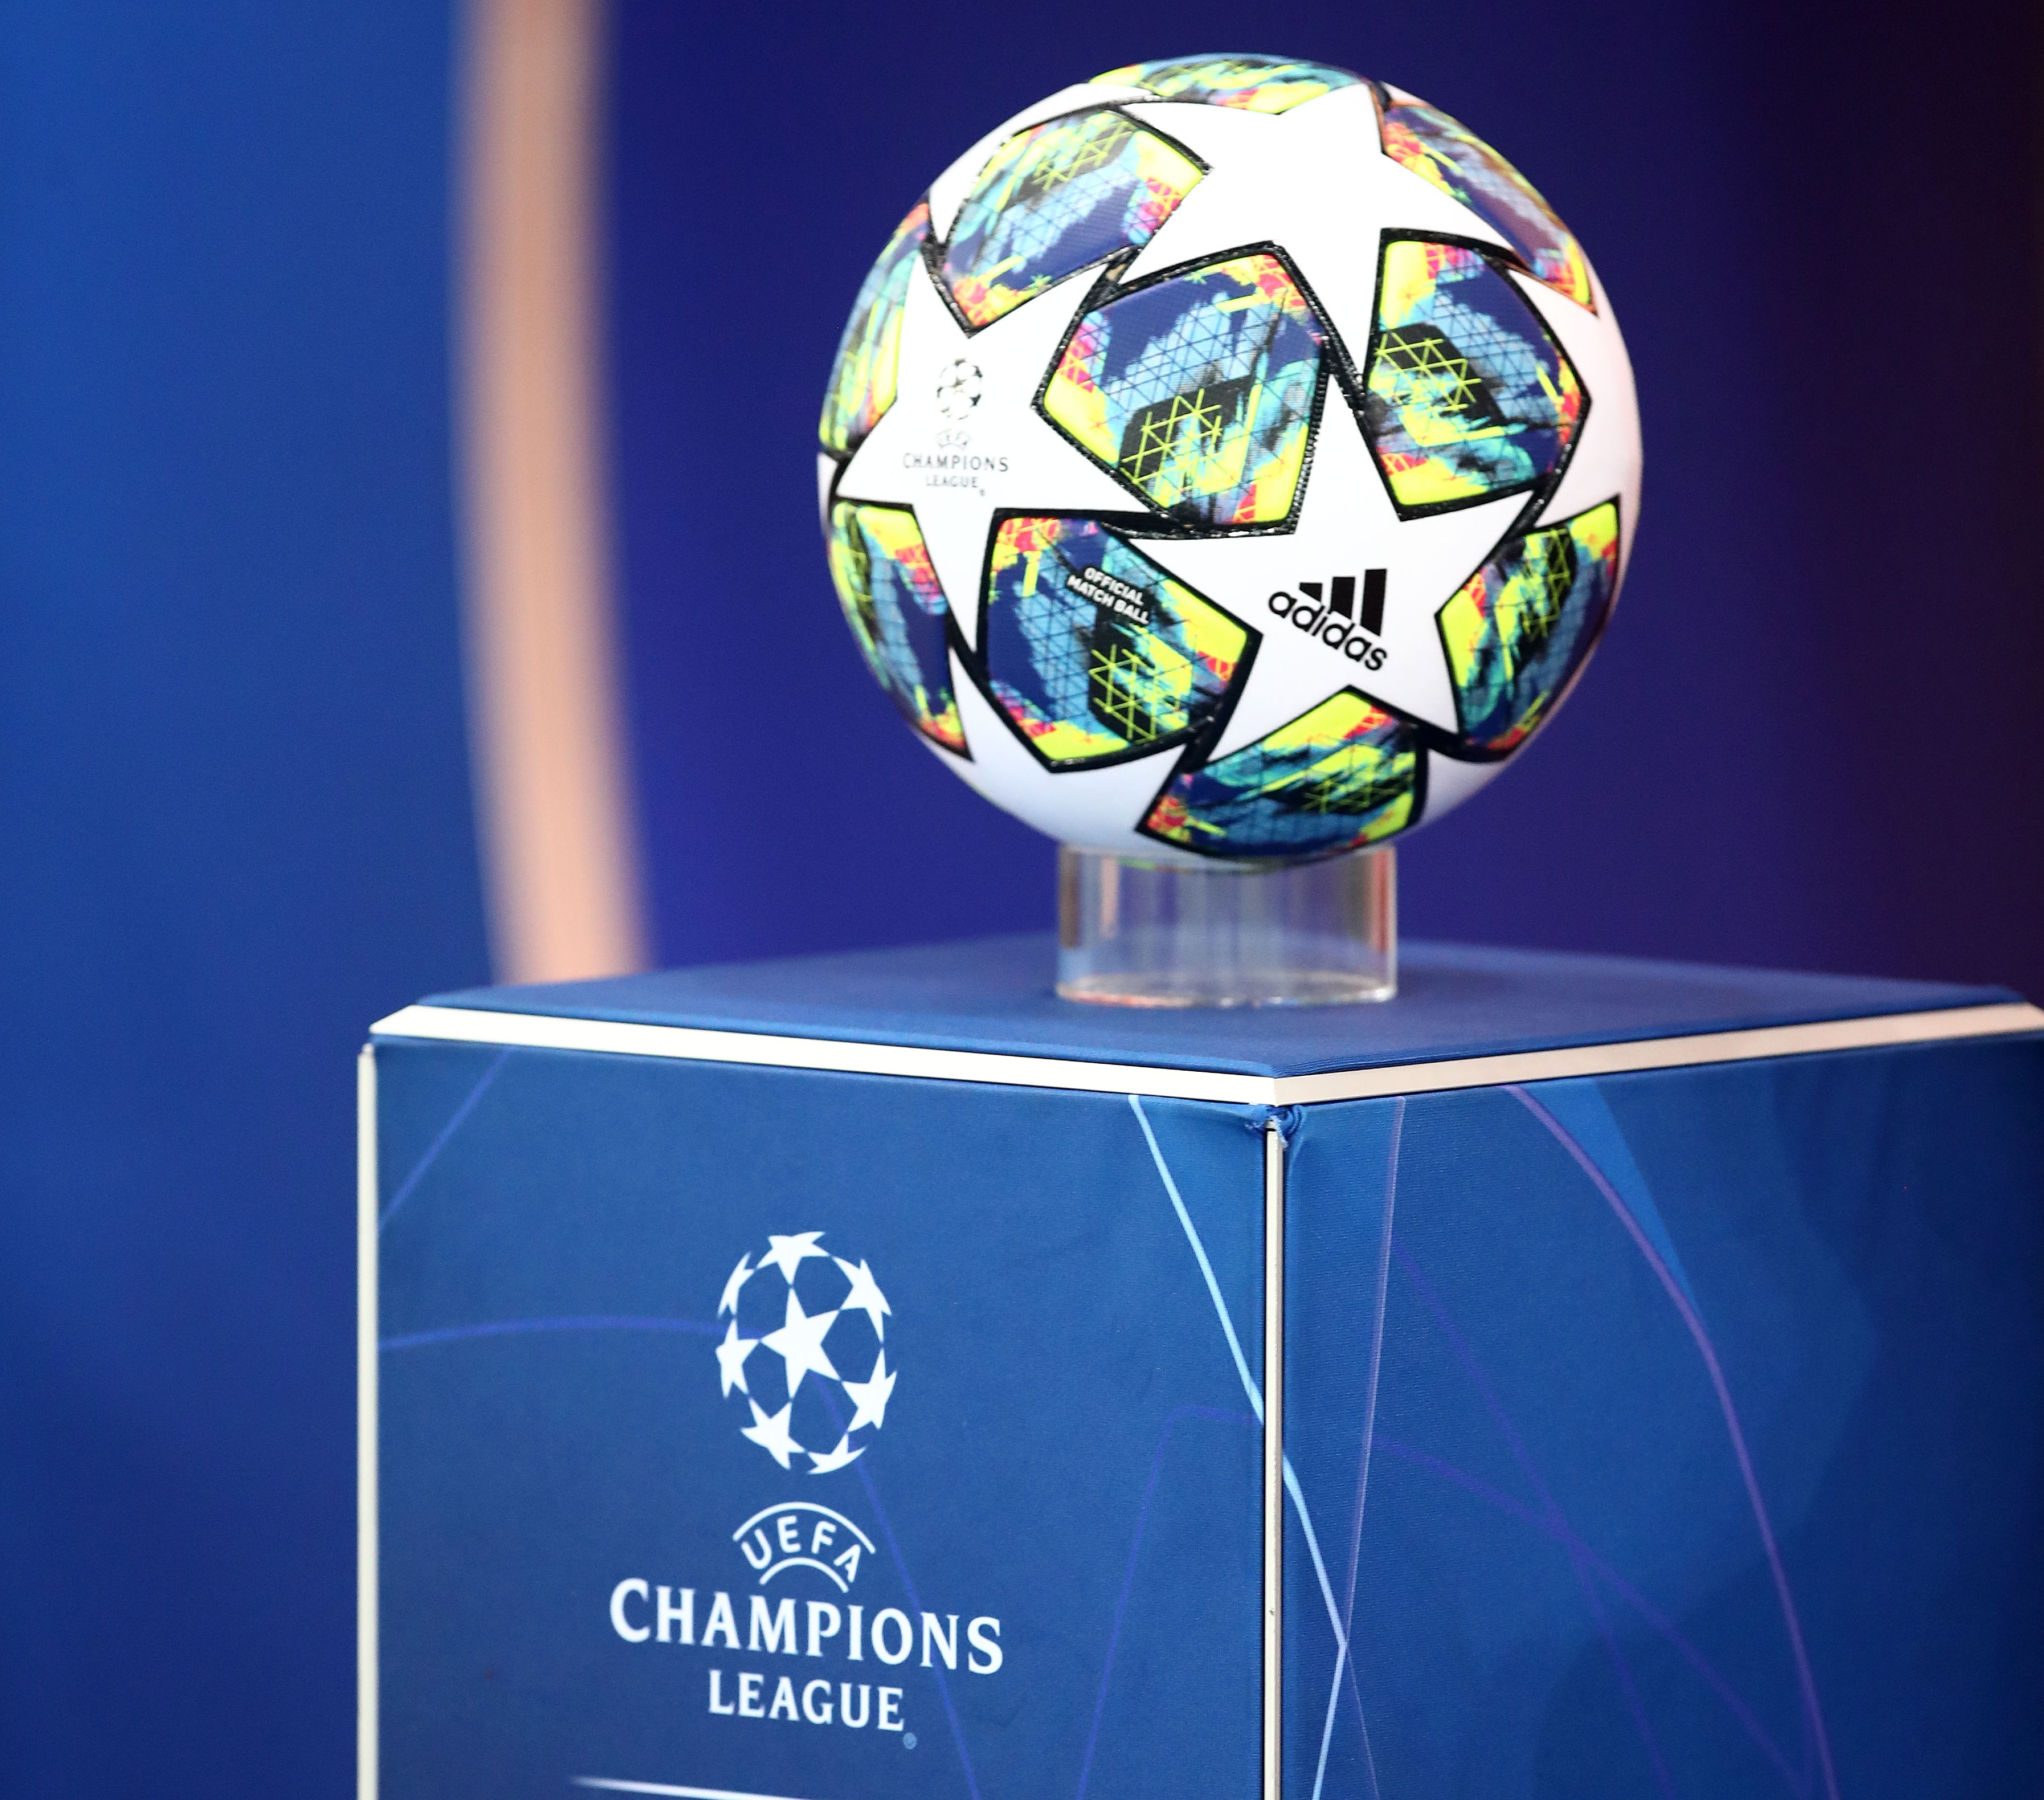 Times: “Οριστικά στη Λισαβόνα το Final-8 του Chamions League και στη Γερμανία το Europa”